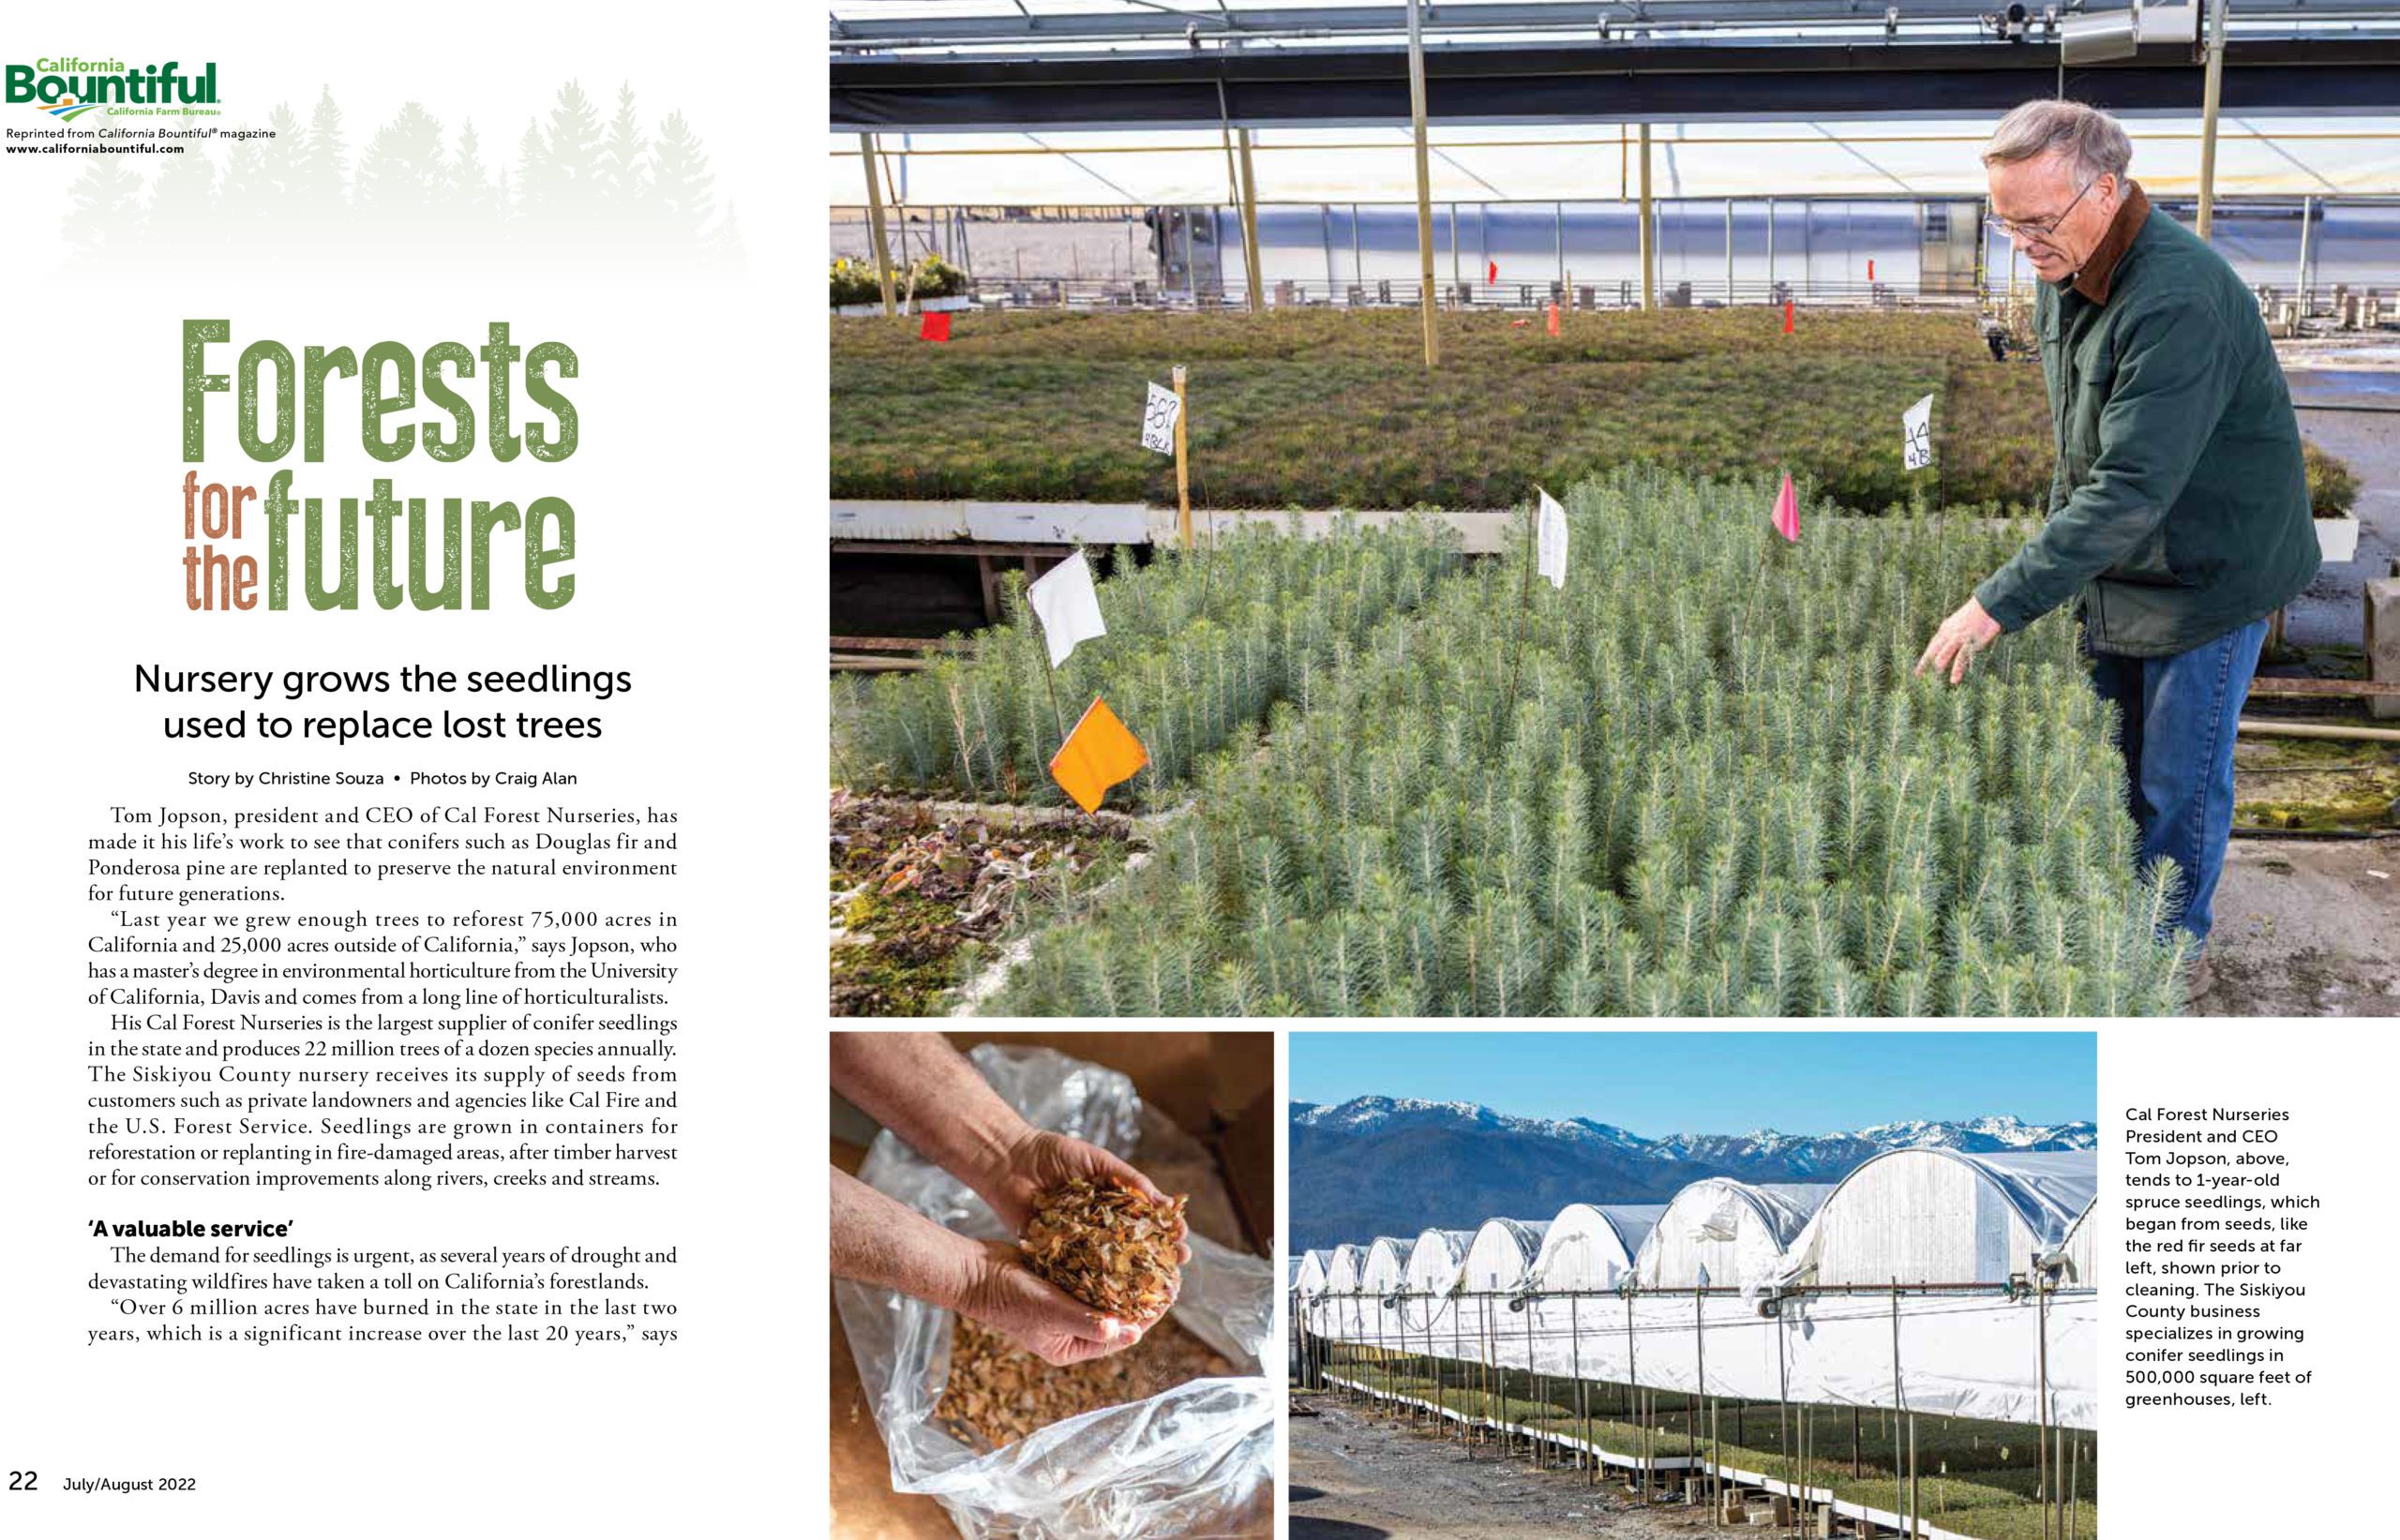 California Bountiful Magazine | CalForest Nurseries | Tom Jopson | Etna CA